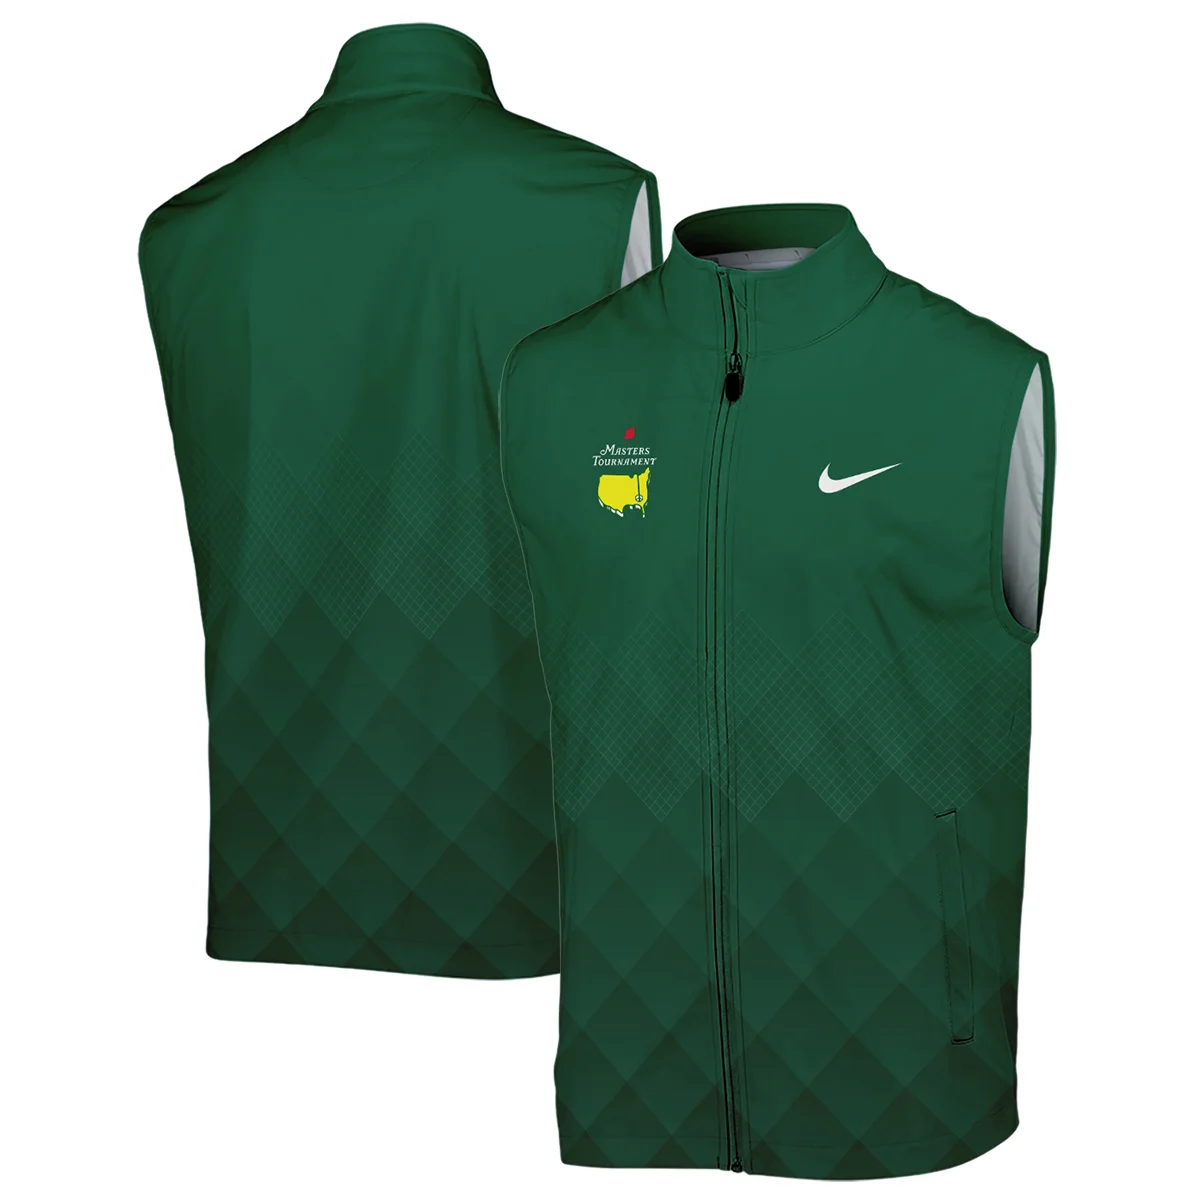 Masters Tournament Nike Gradient Dark Green Pattern Style Classic Quarter Zipped Sweatshirt